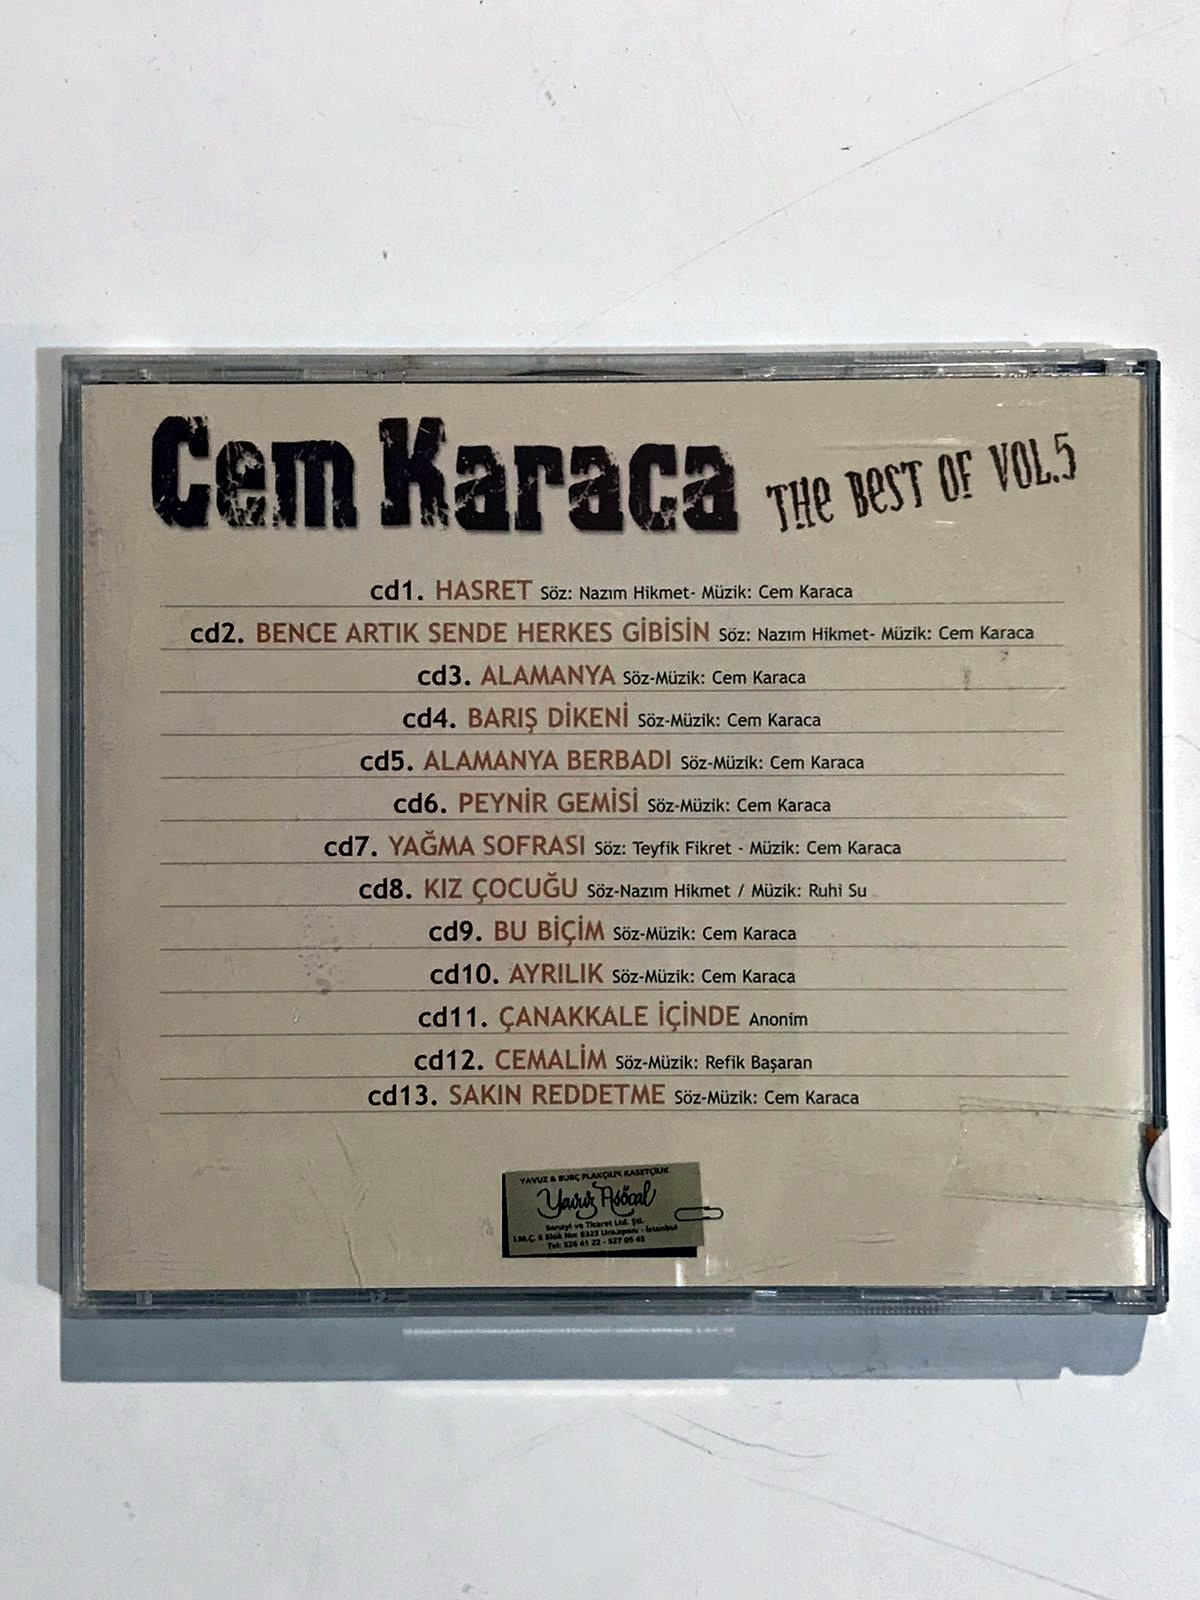 The Best of Vol.5 / Cem KARACA - Cd